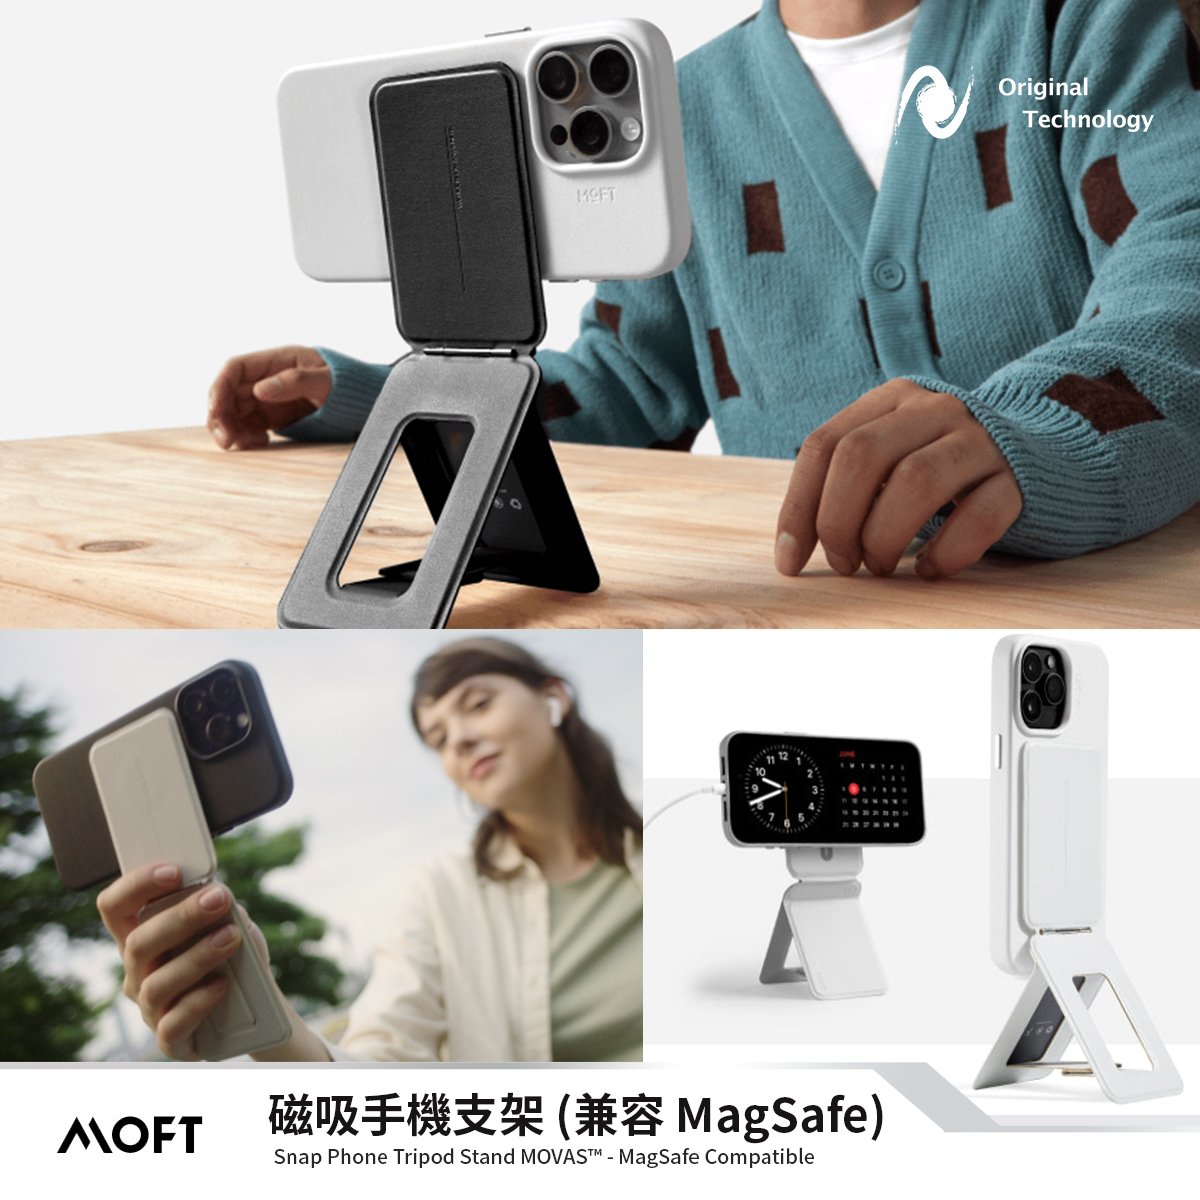  Moft Snap Phone Tripod Stand MOVAS™ 輕薄三角支架 - 一秒變身自拍神器！